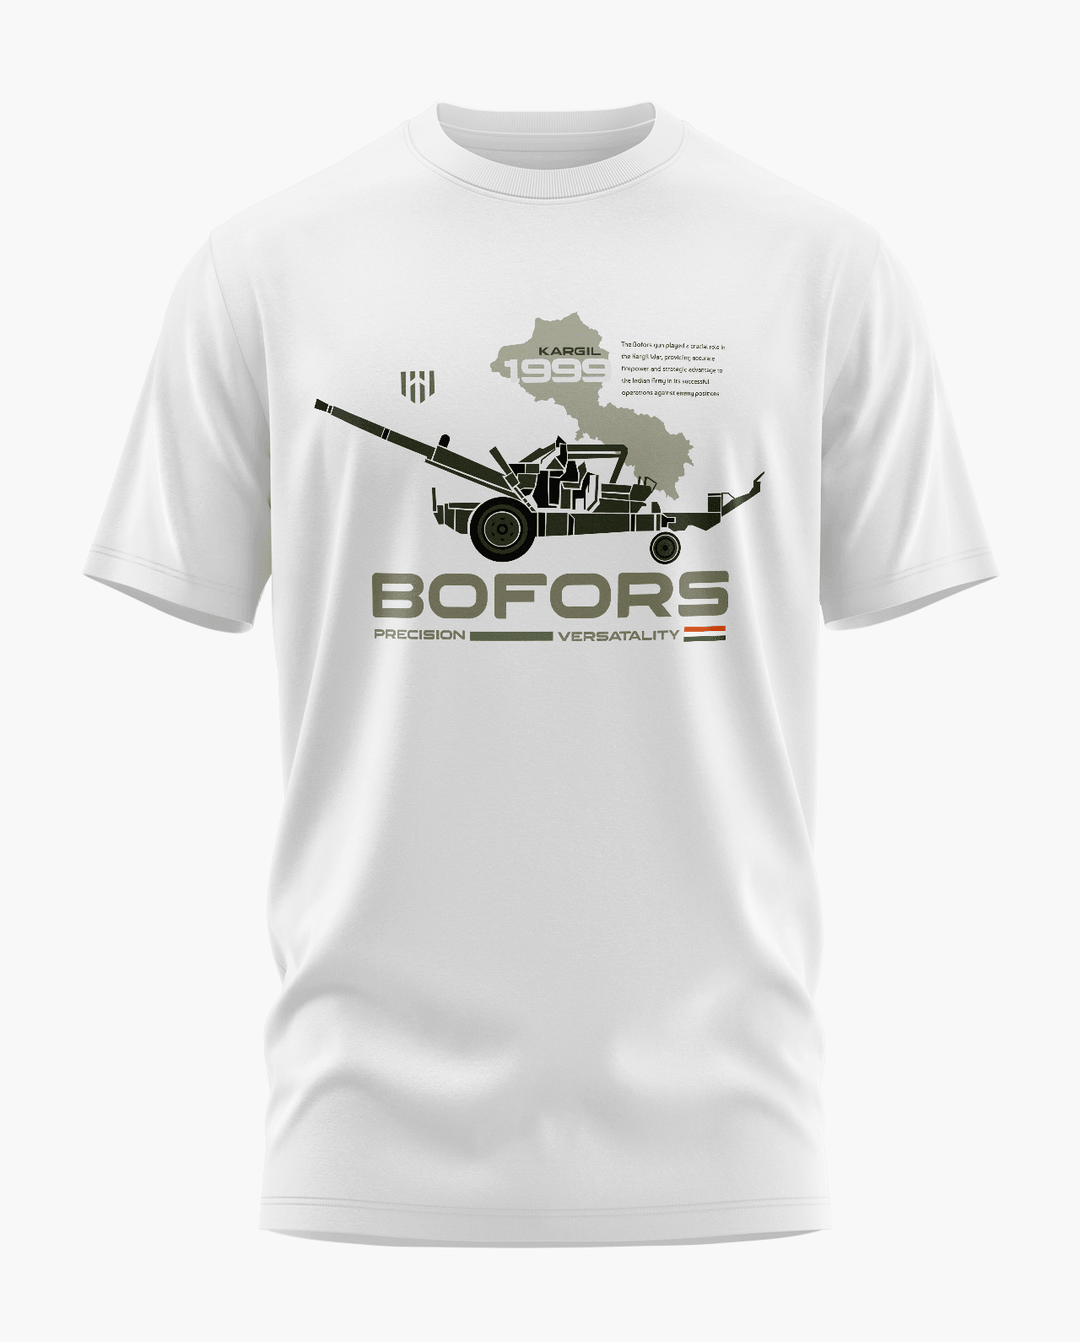 Bofors Precision Versatality T-Shirt - Aero Armour